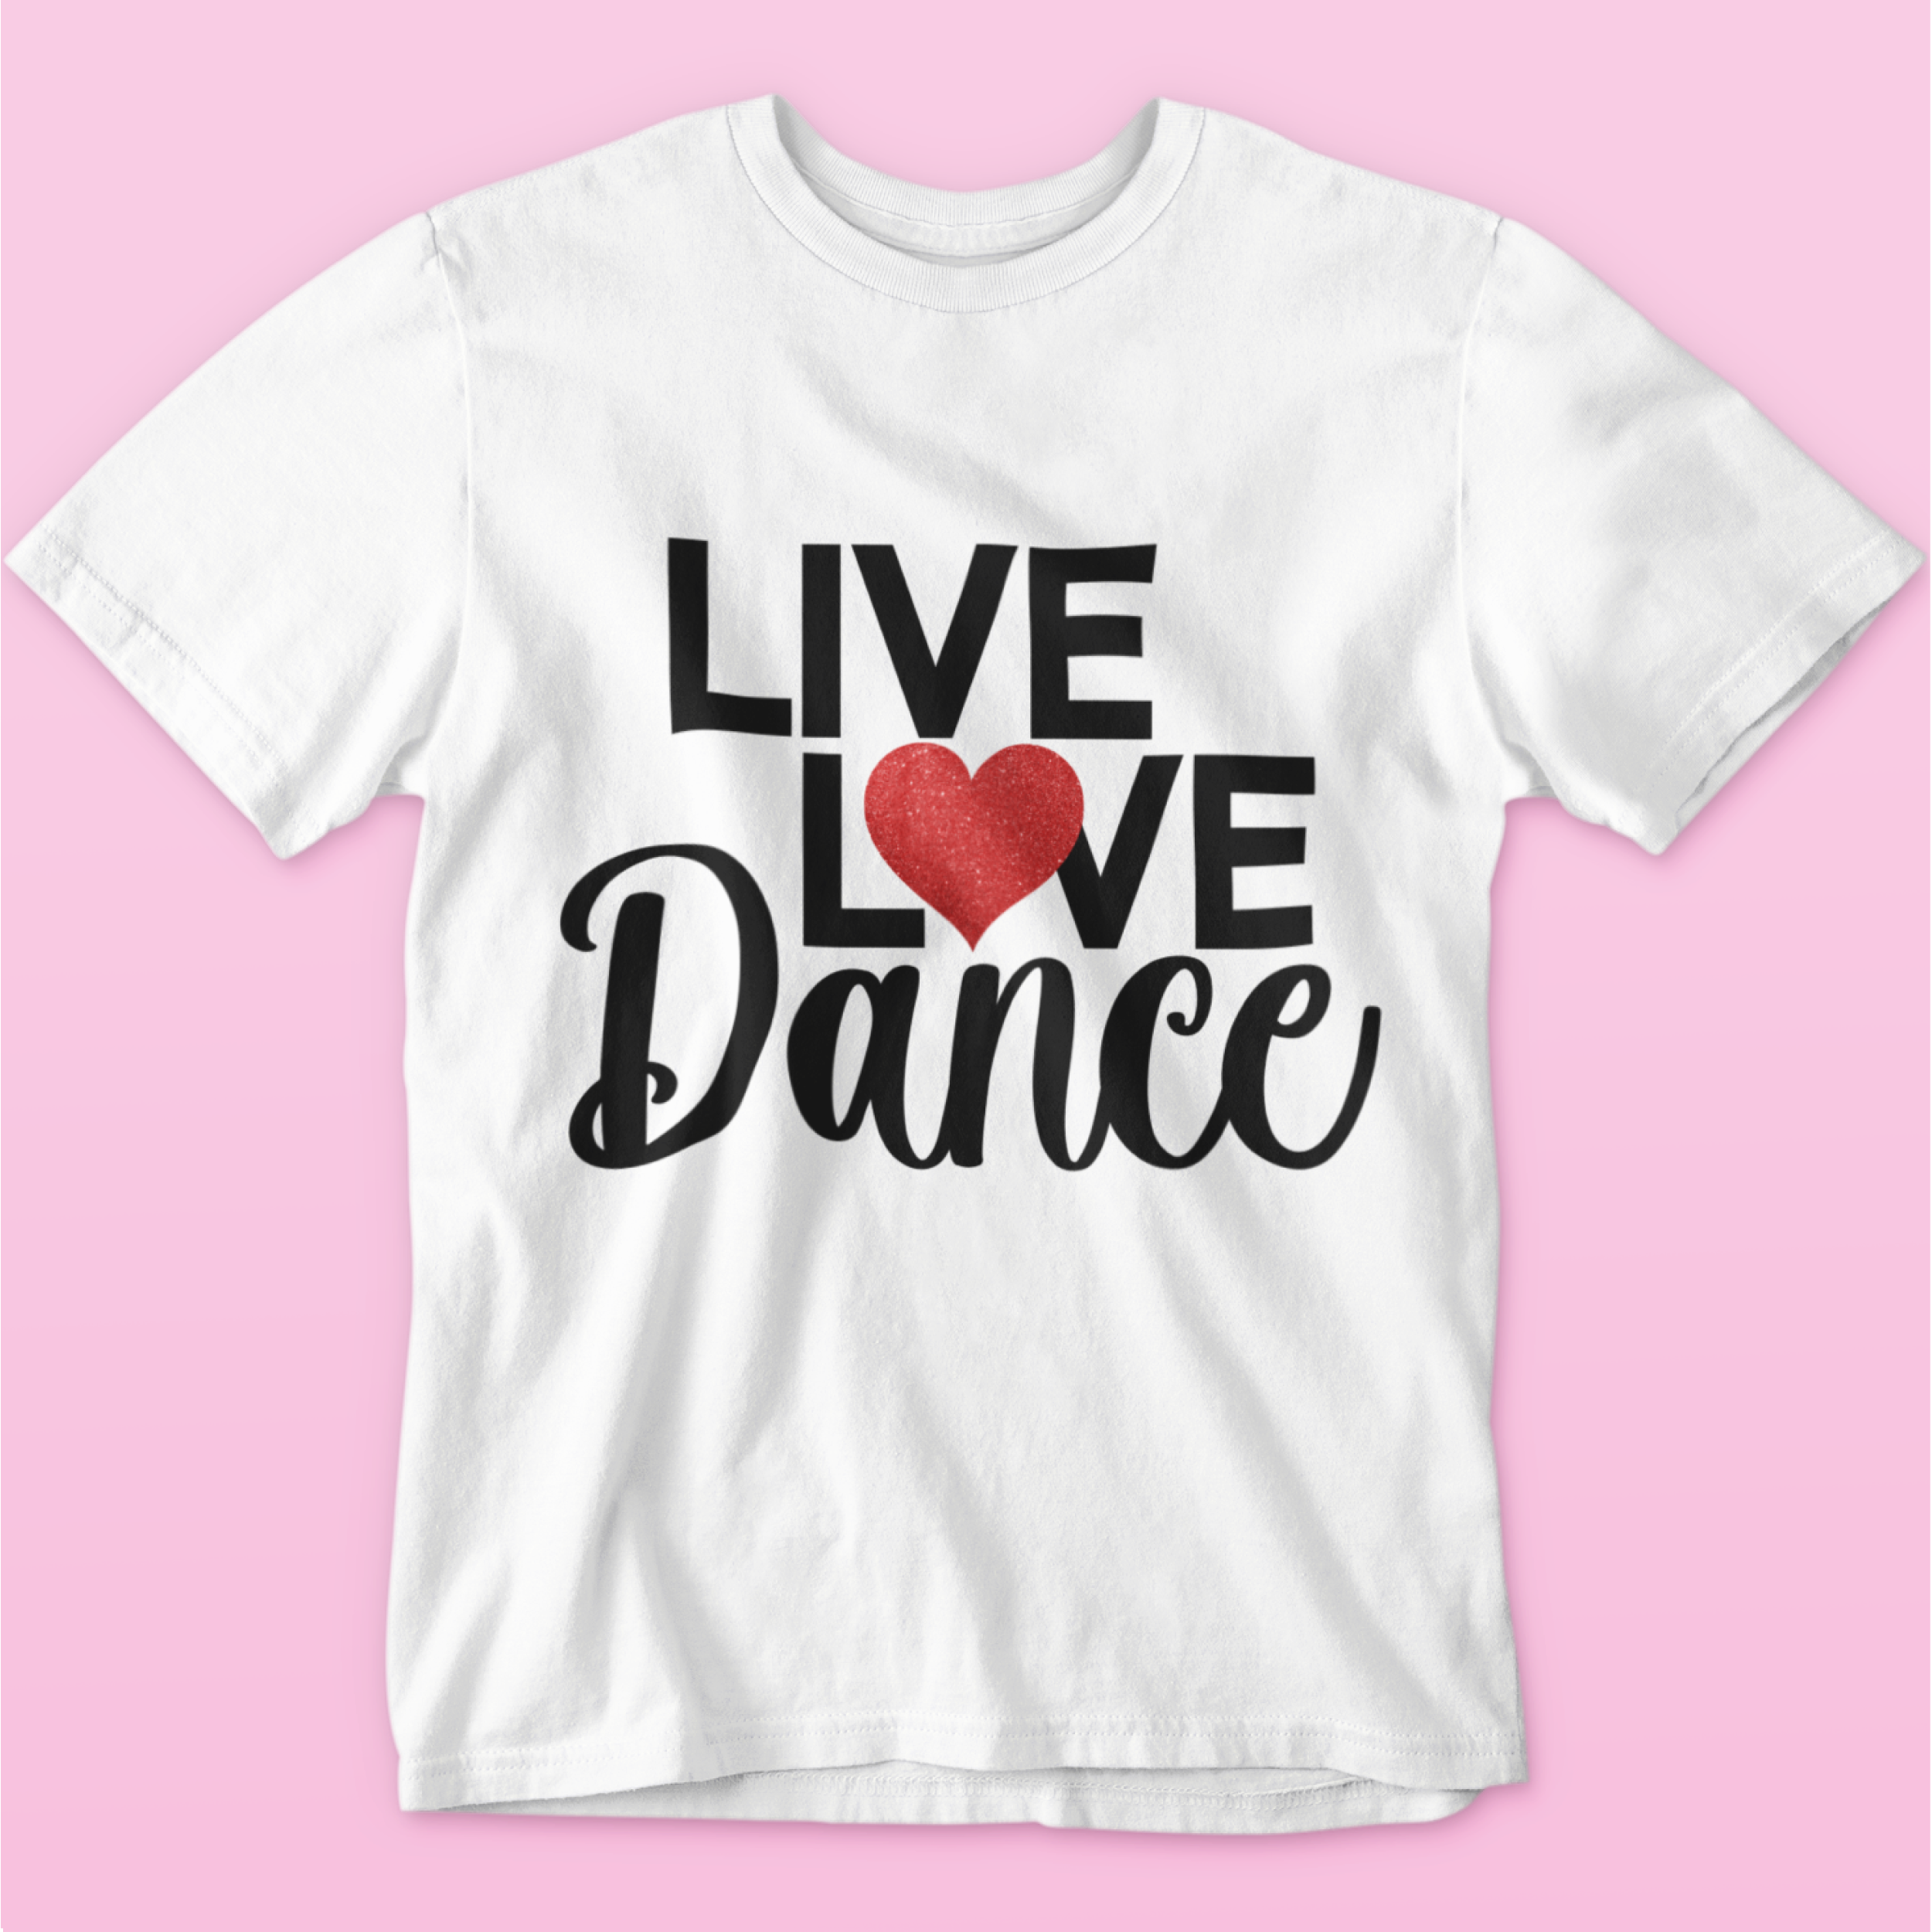 Live love dance glitter tee shirt